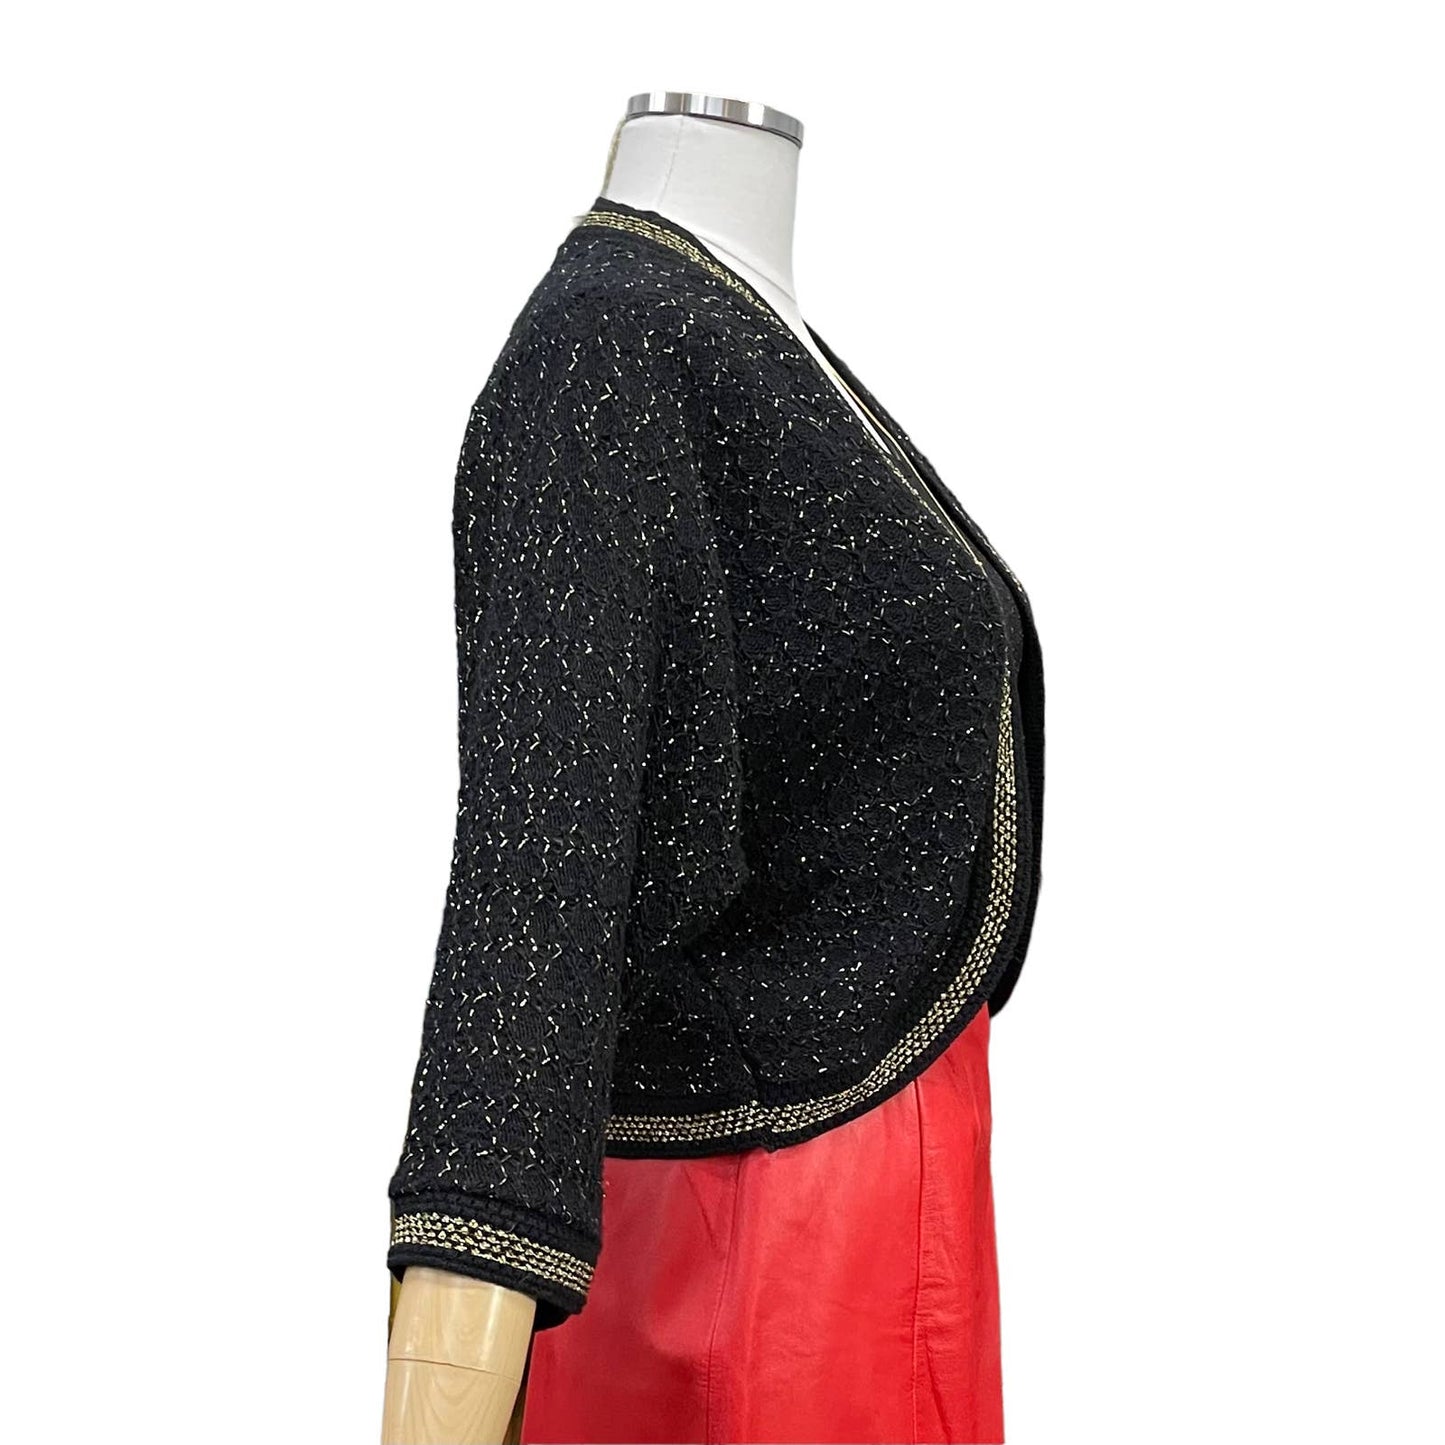 70s black and gold acrylic knit shrug cardigan sweater / size M L XL